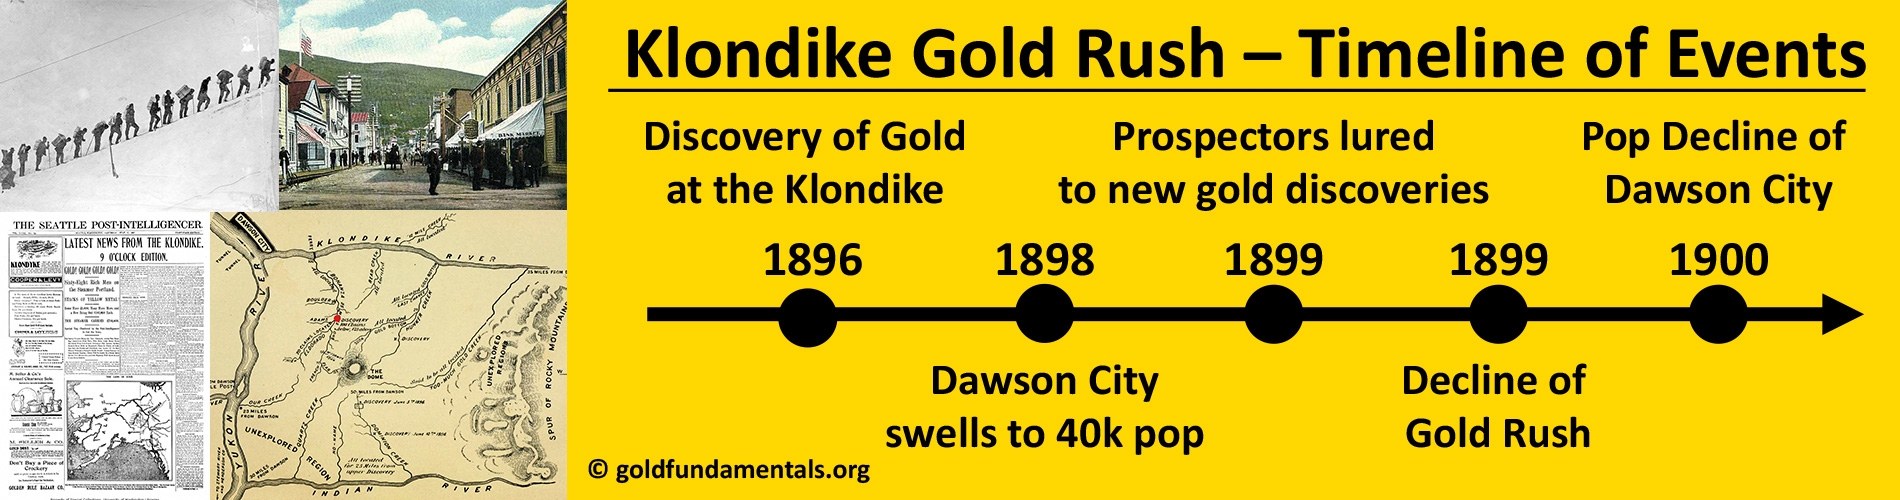 Klondike Gold Rush - timeline of key events.